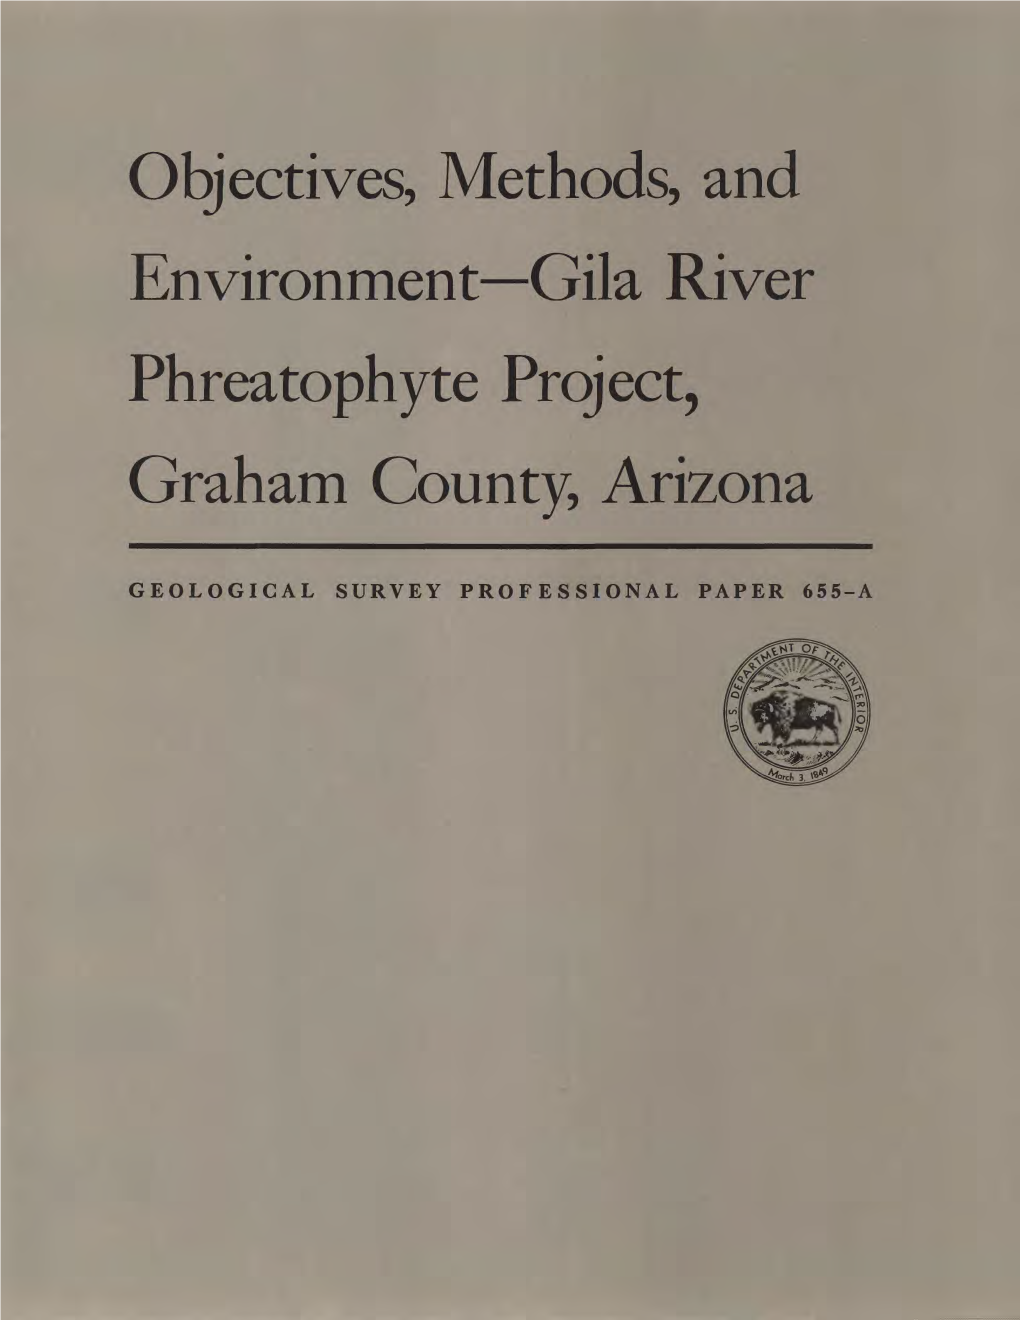 Objectives, Methods, and Environment Gila River Phreatophyte Project, Graham County, Arizona